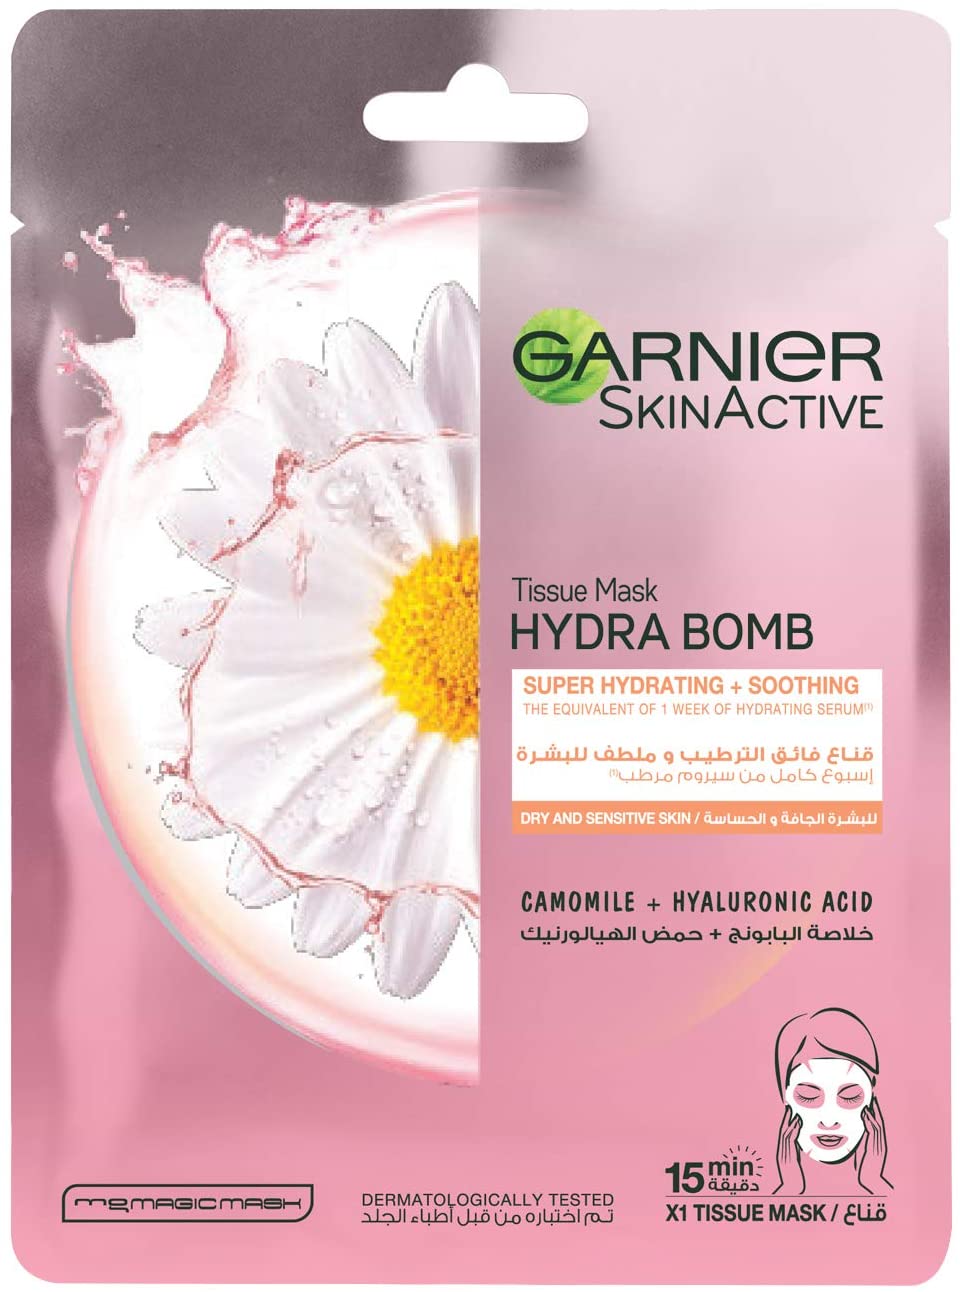 Tissue Mask Hydra Bomb by Garnier SkinActive –